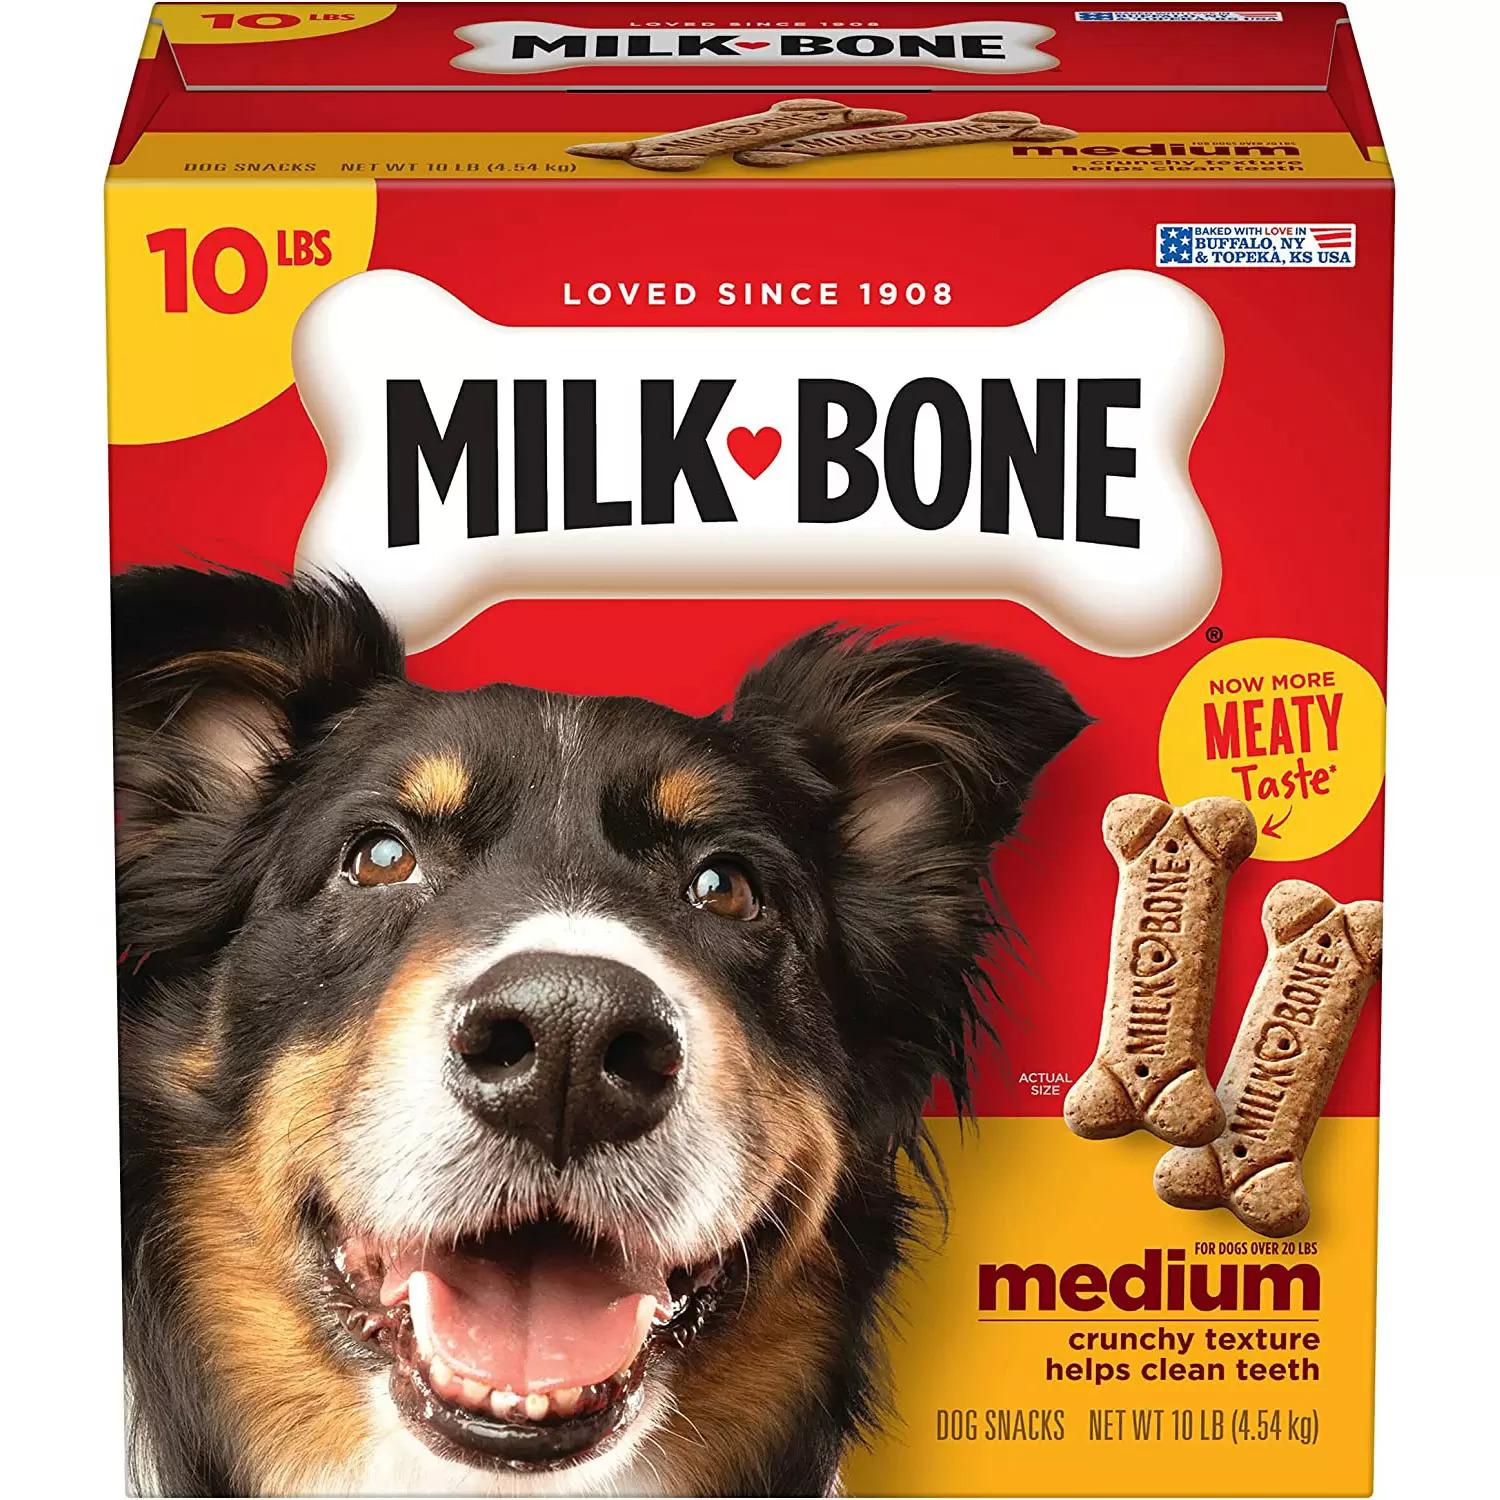 Milk-Bone Original Dog Treats Biscuits for $10.49 Shipped